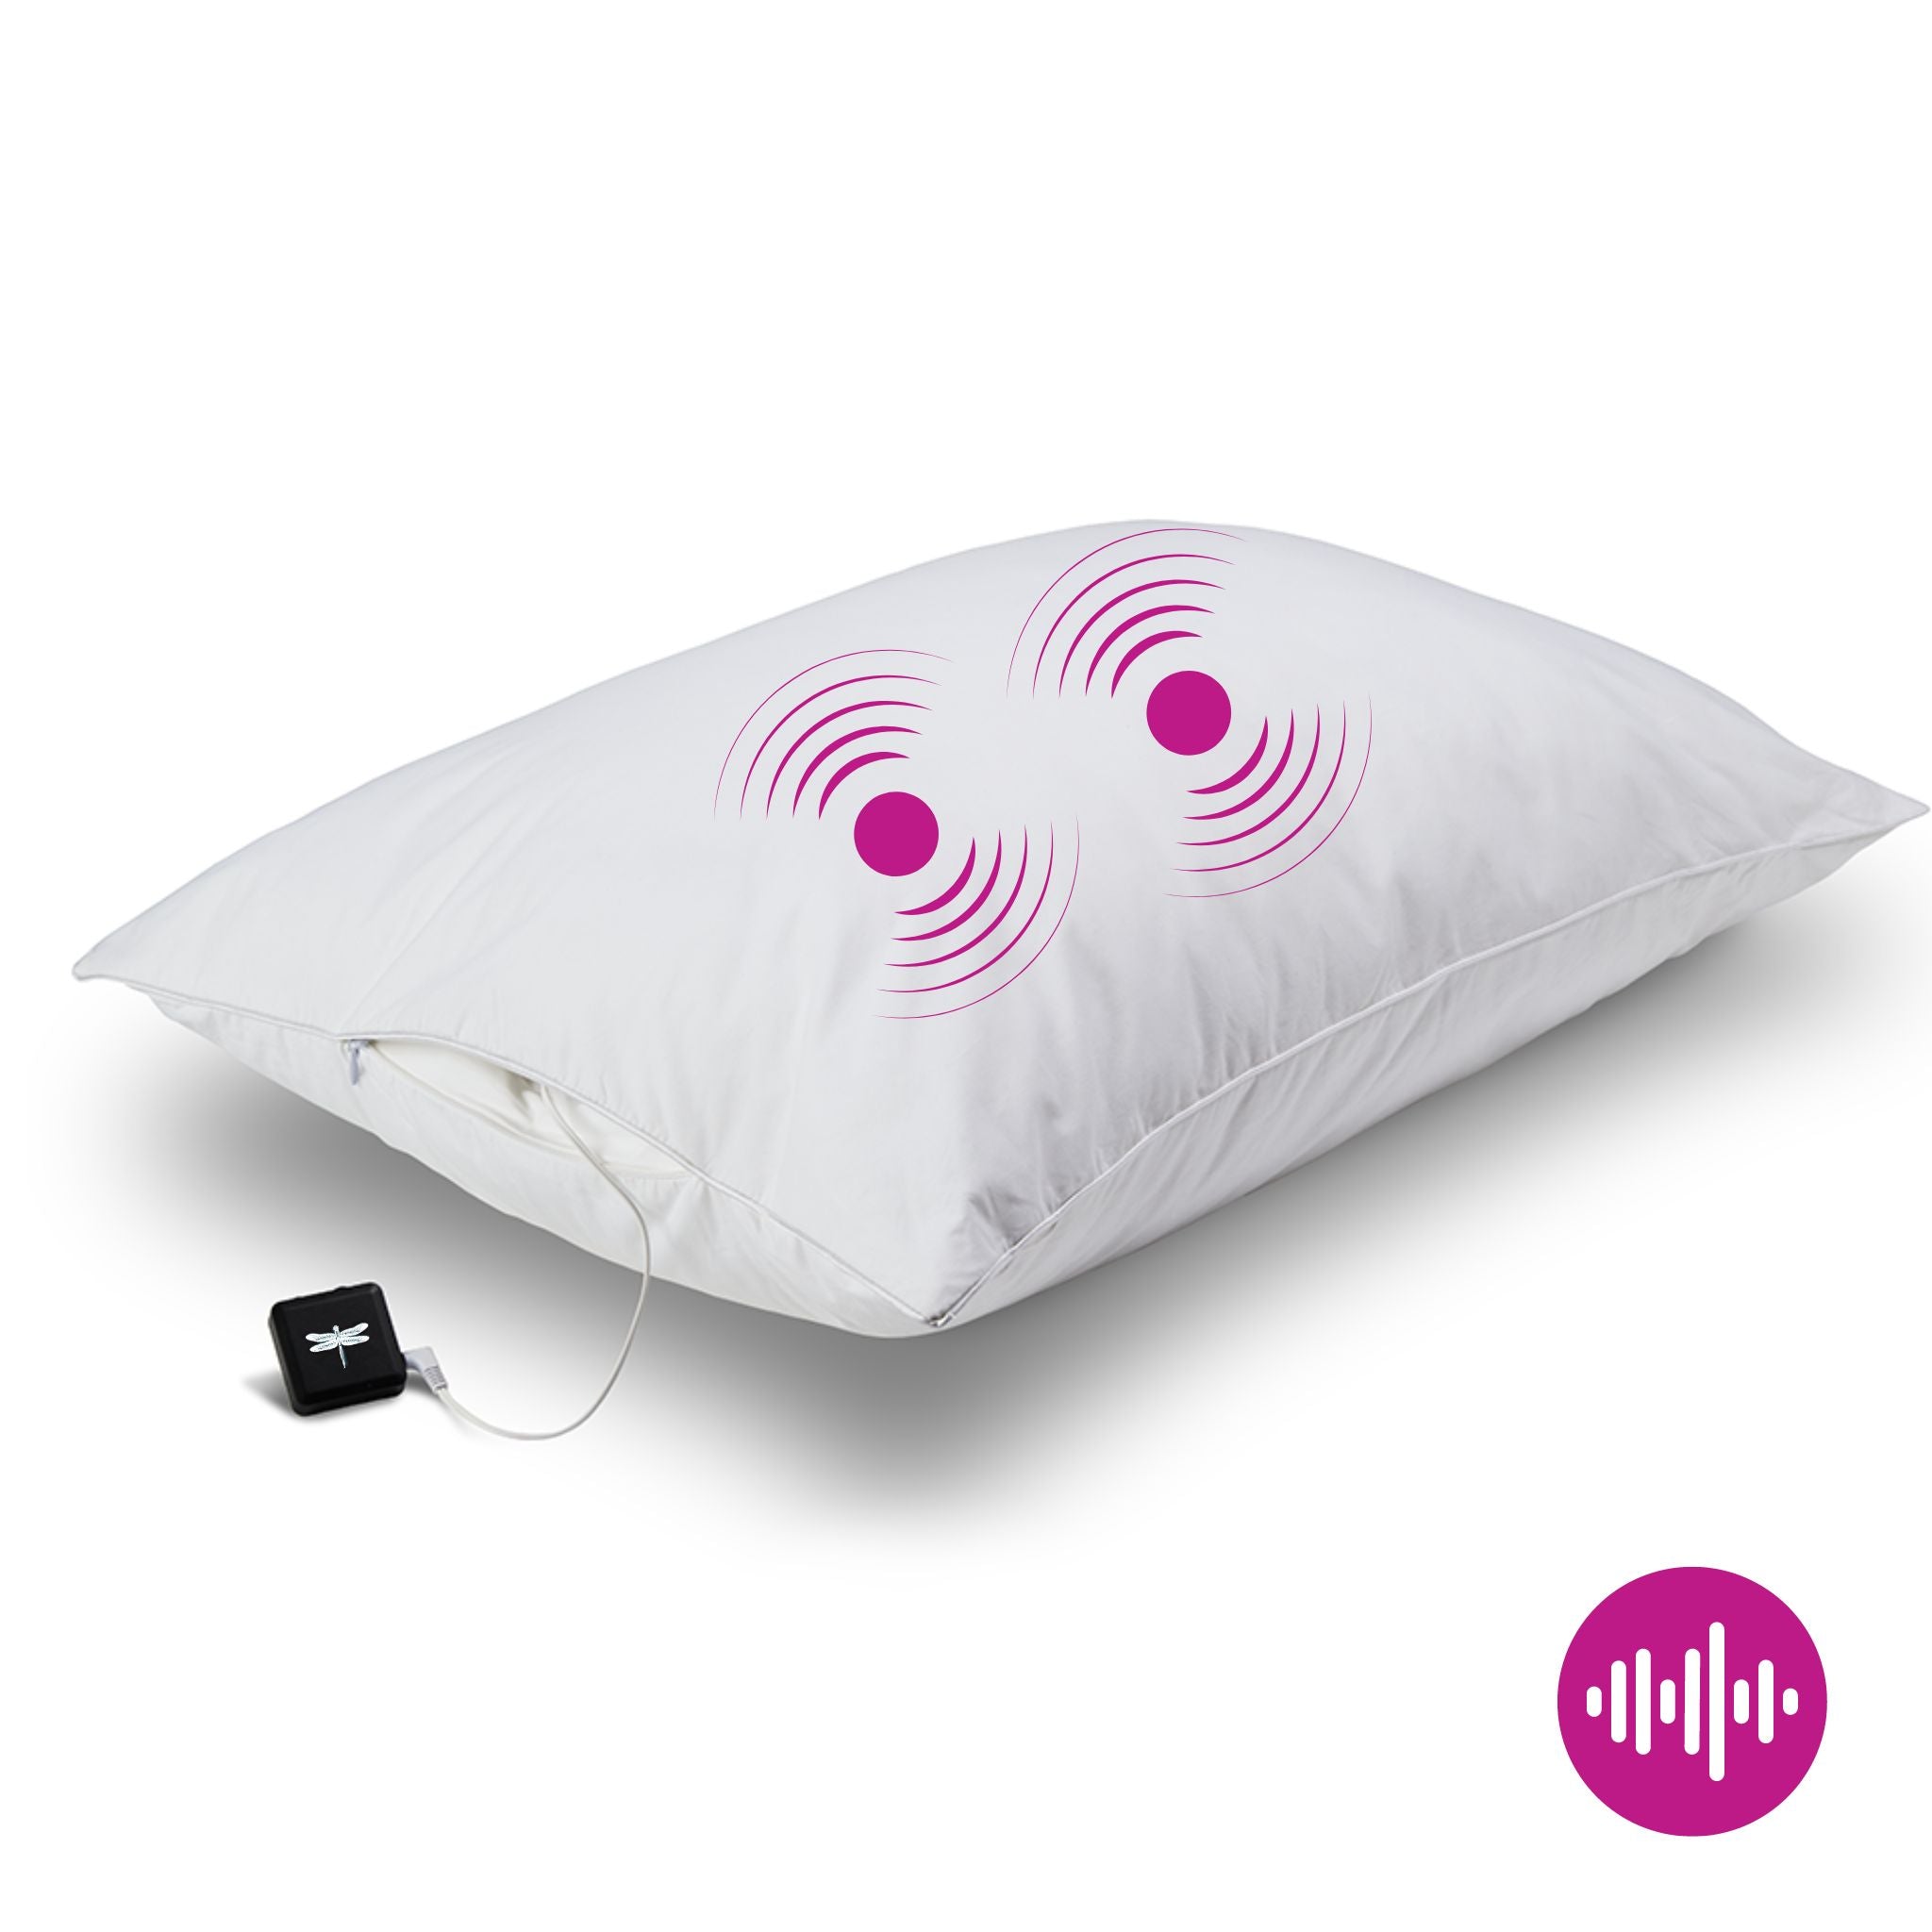 Firm Support Sound Pillow